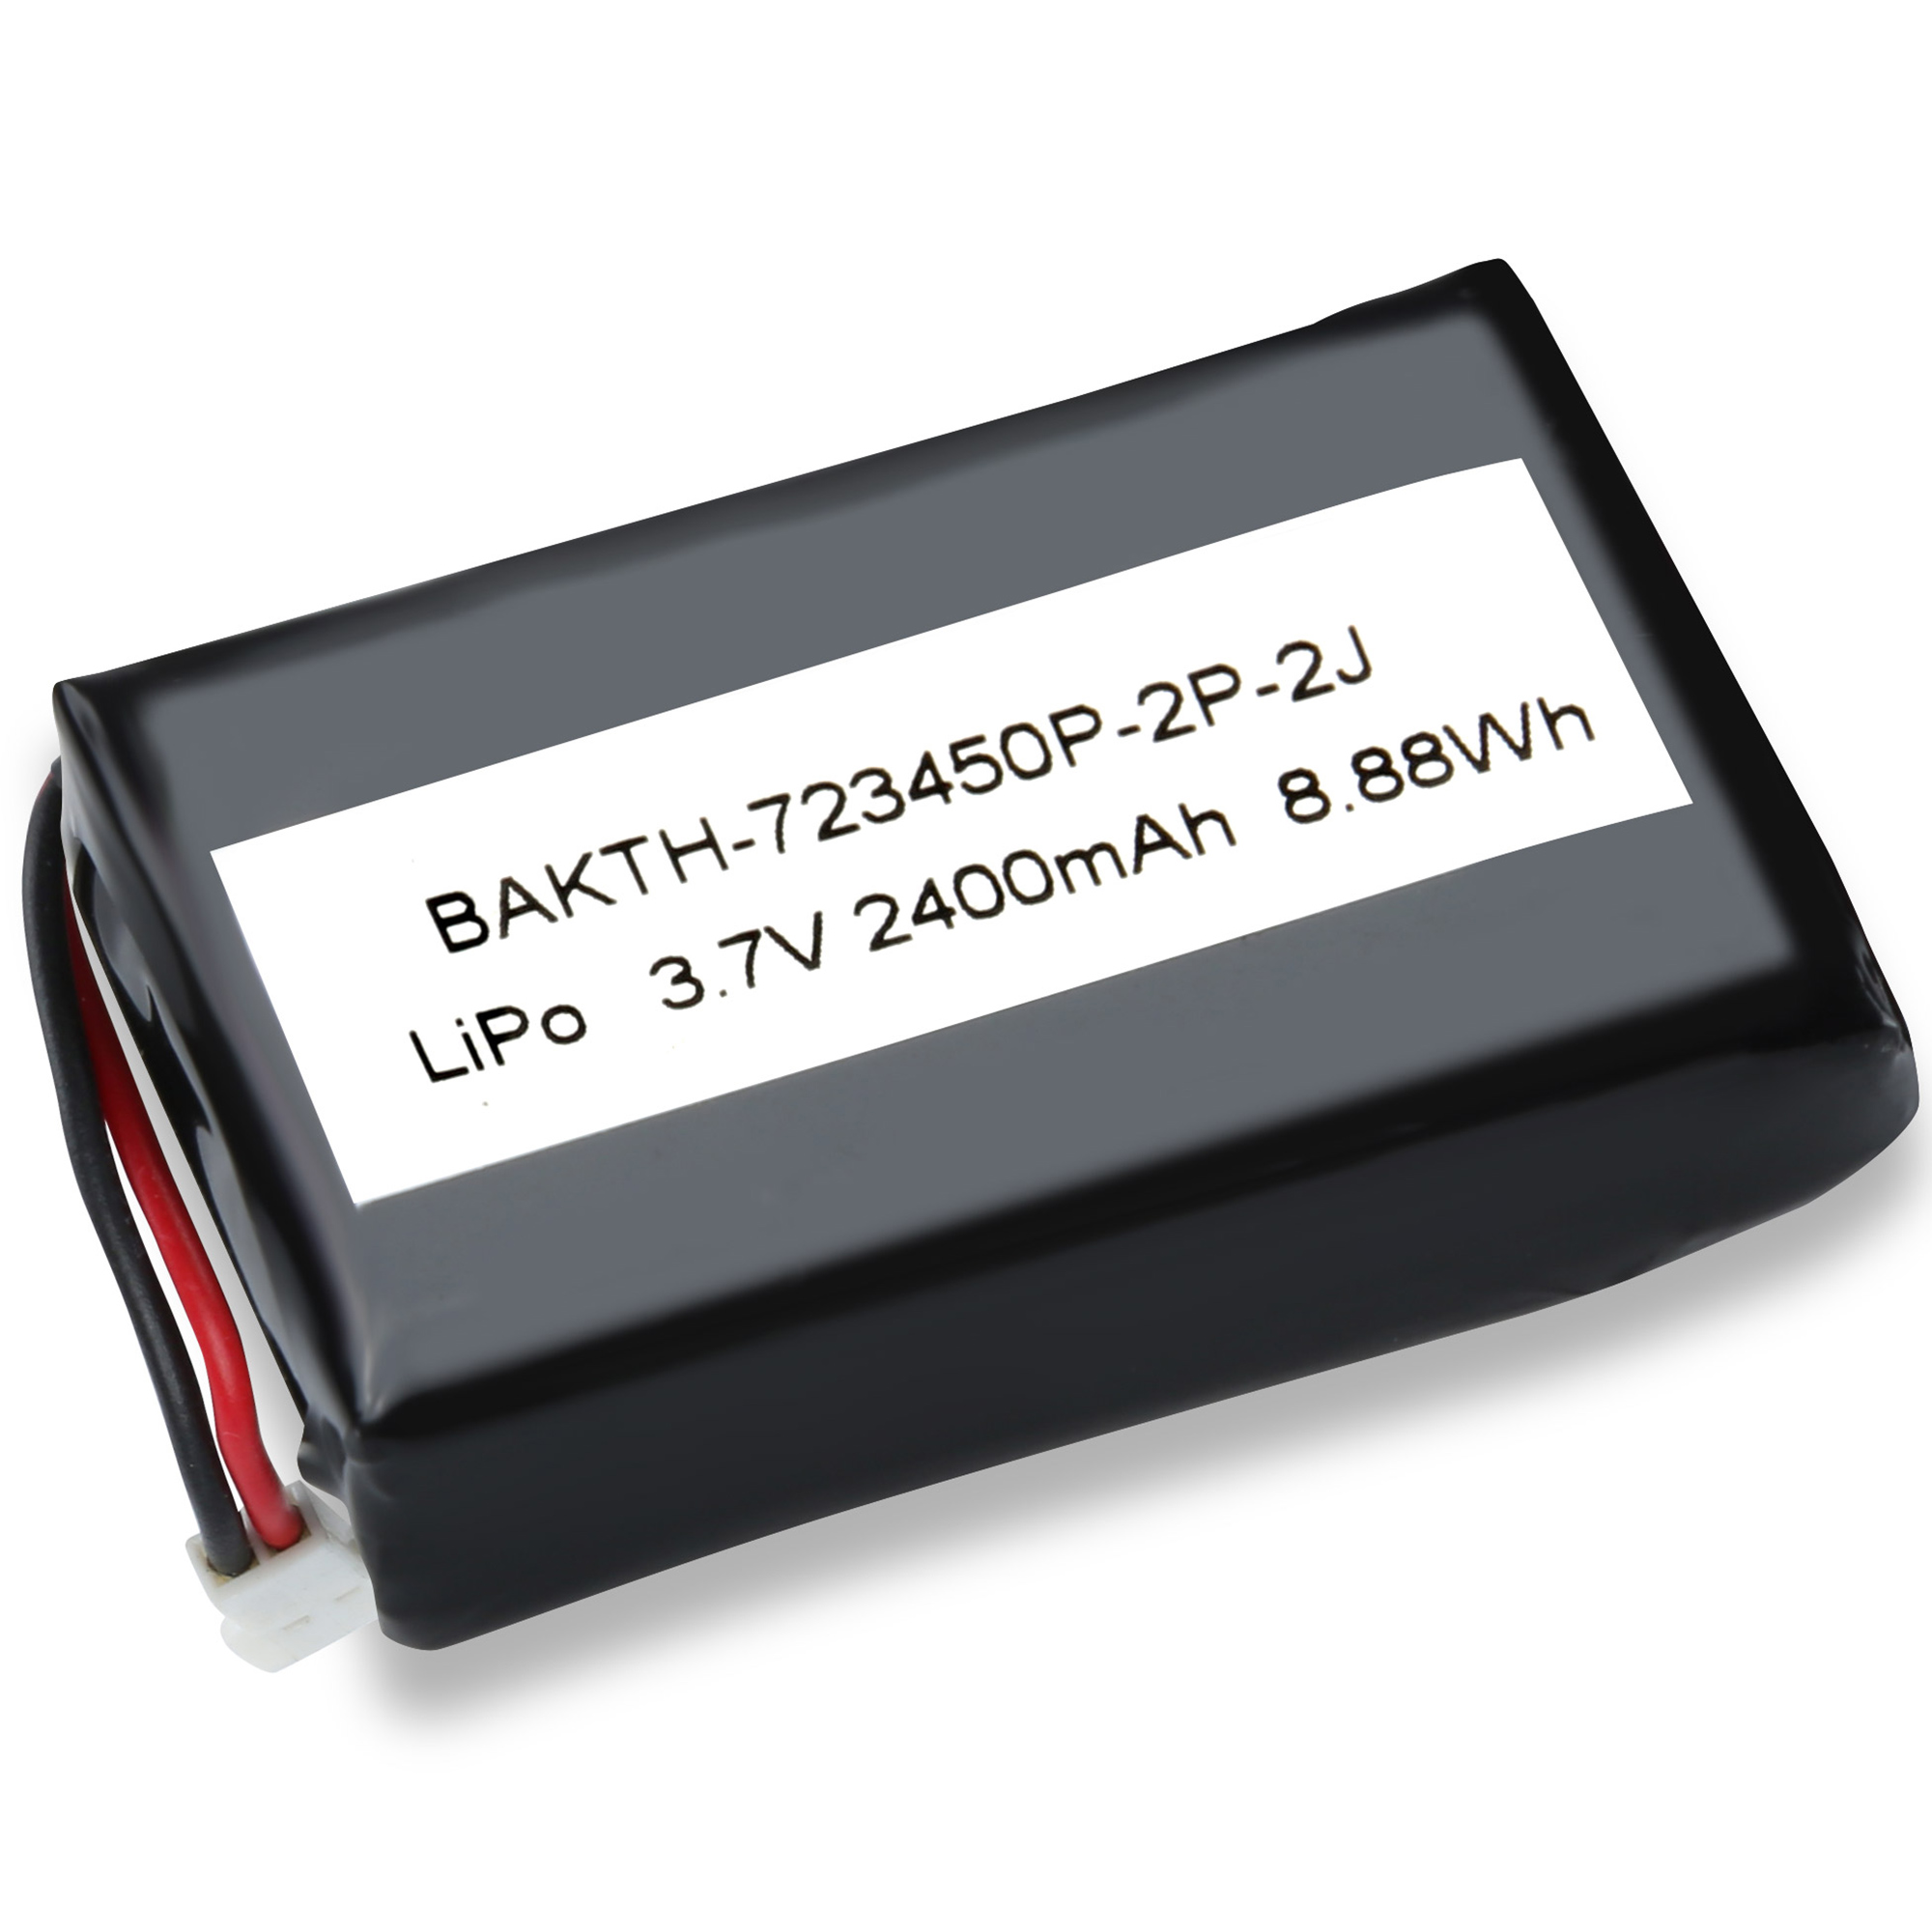 BAKTH-723450P-2P-3J Rechargeable Lithium Polymer Battery 3.7V 2400mAh Battery Pack